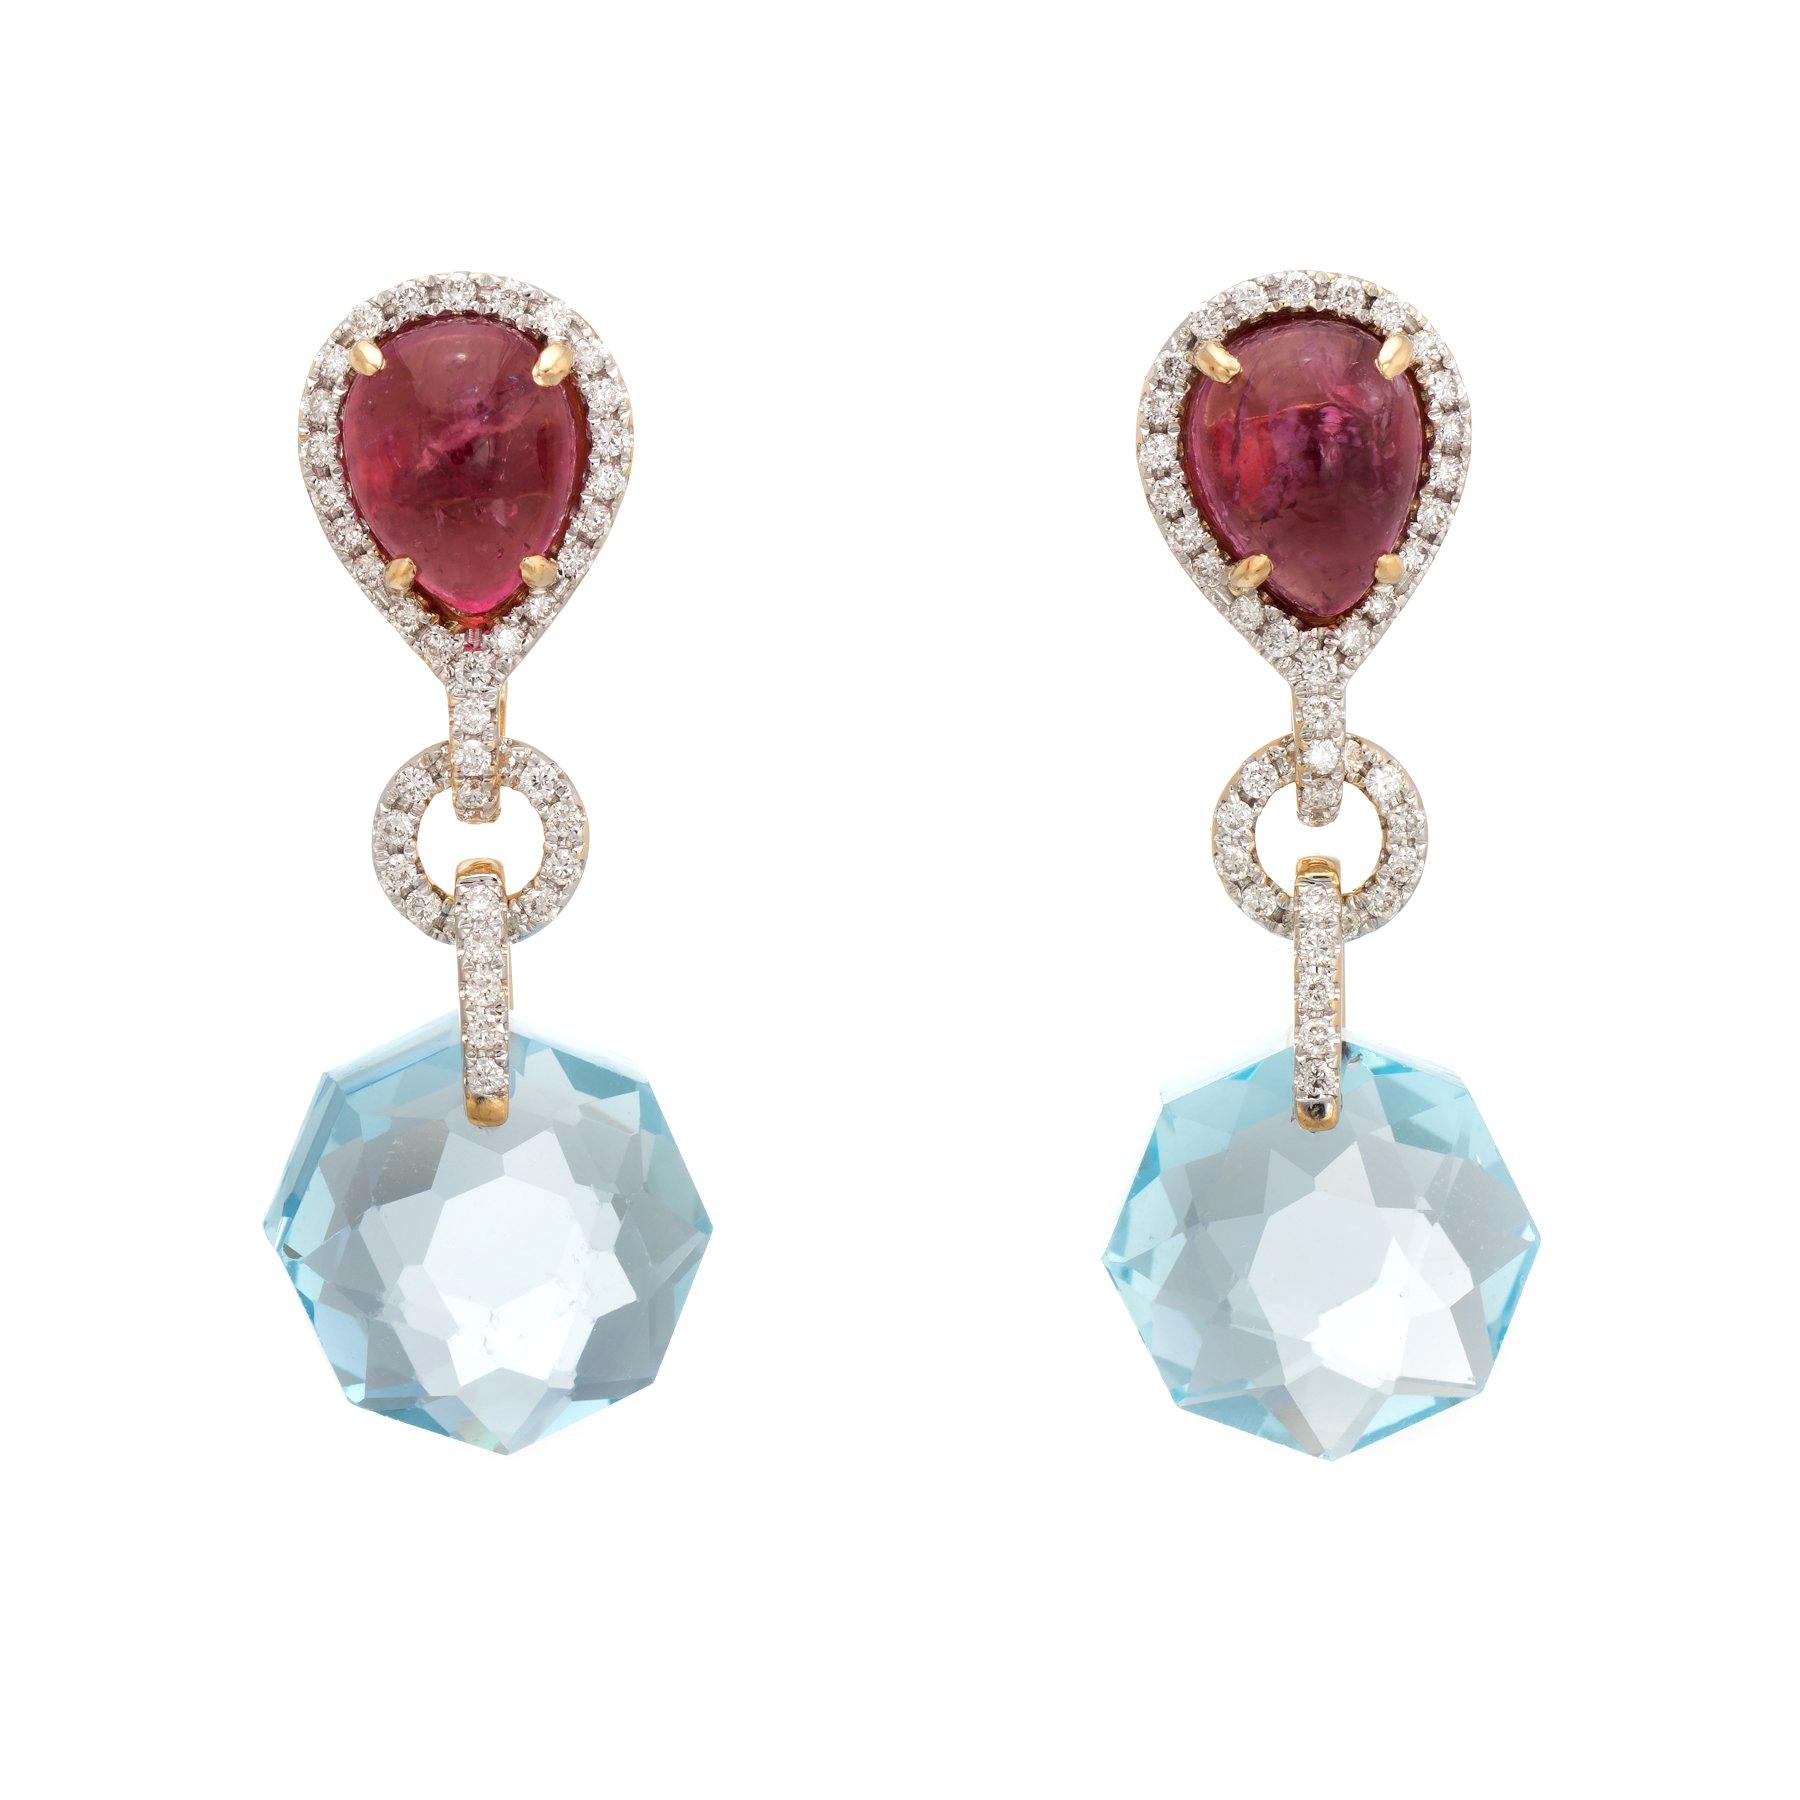 Estate Diamond Earrings Pink Tourmaline Blue Topaz 18 Karat Gold Drop Jewelry